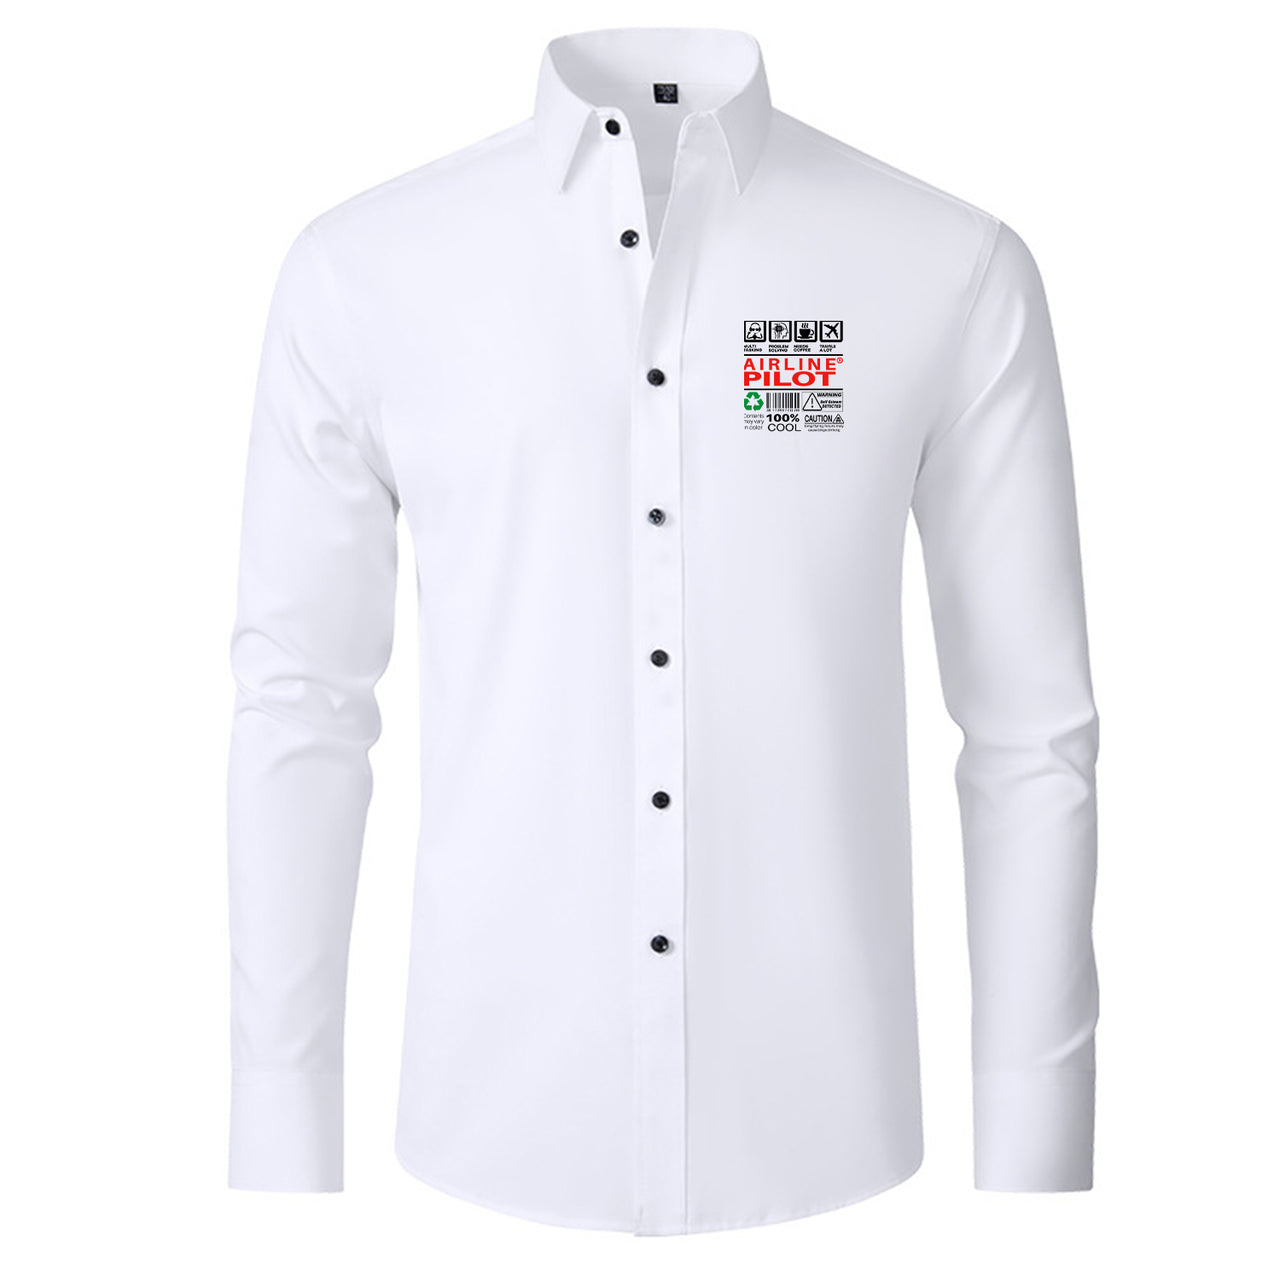 Airline Pilot Label Designed Long Sleeve Shirts